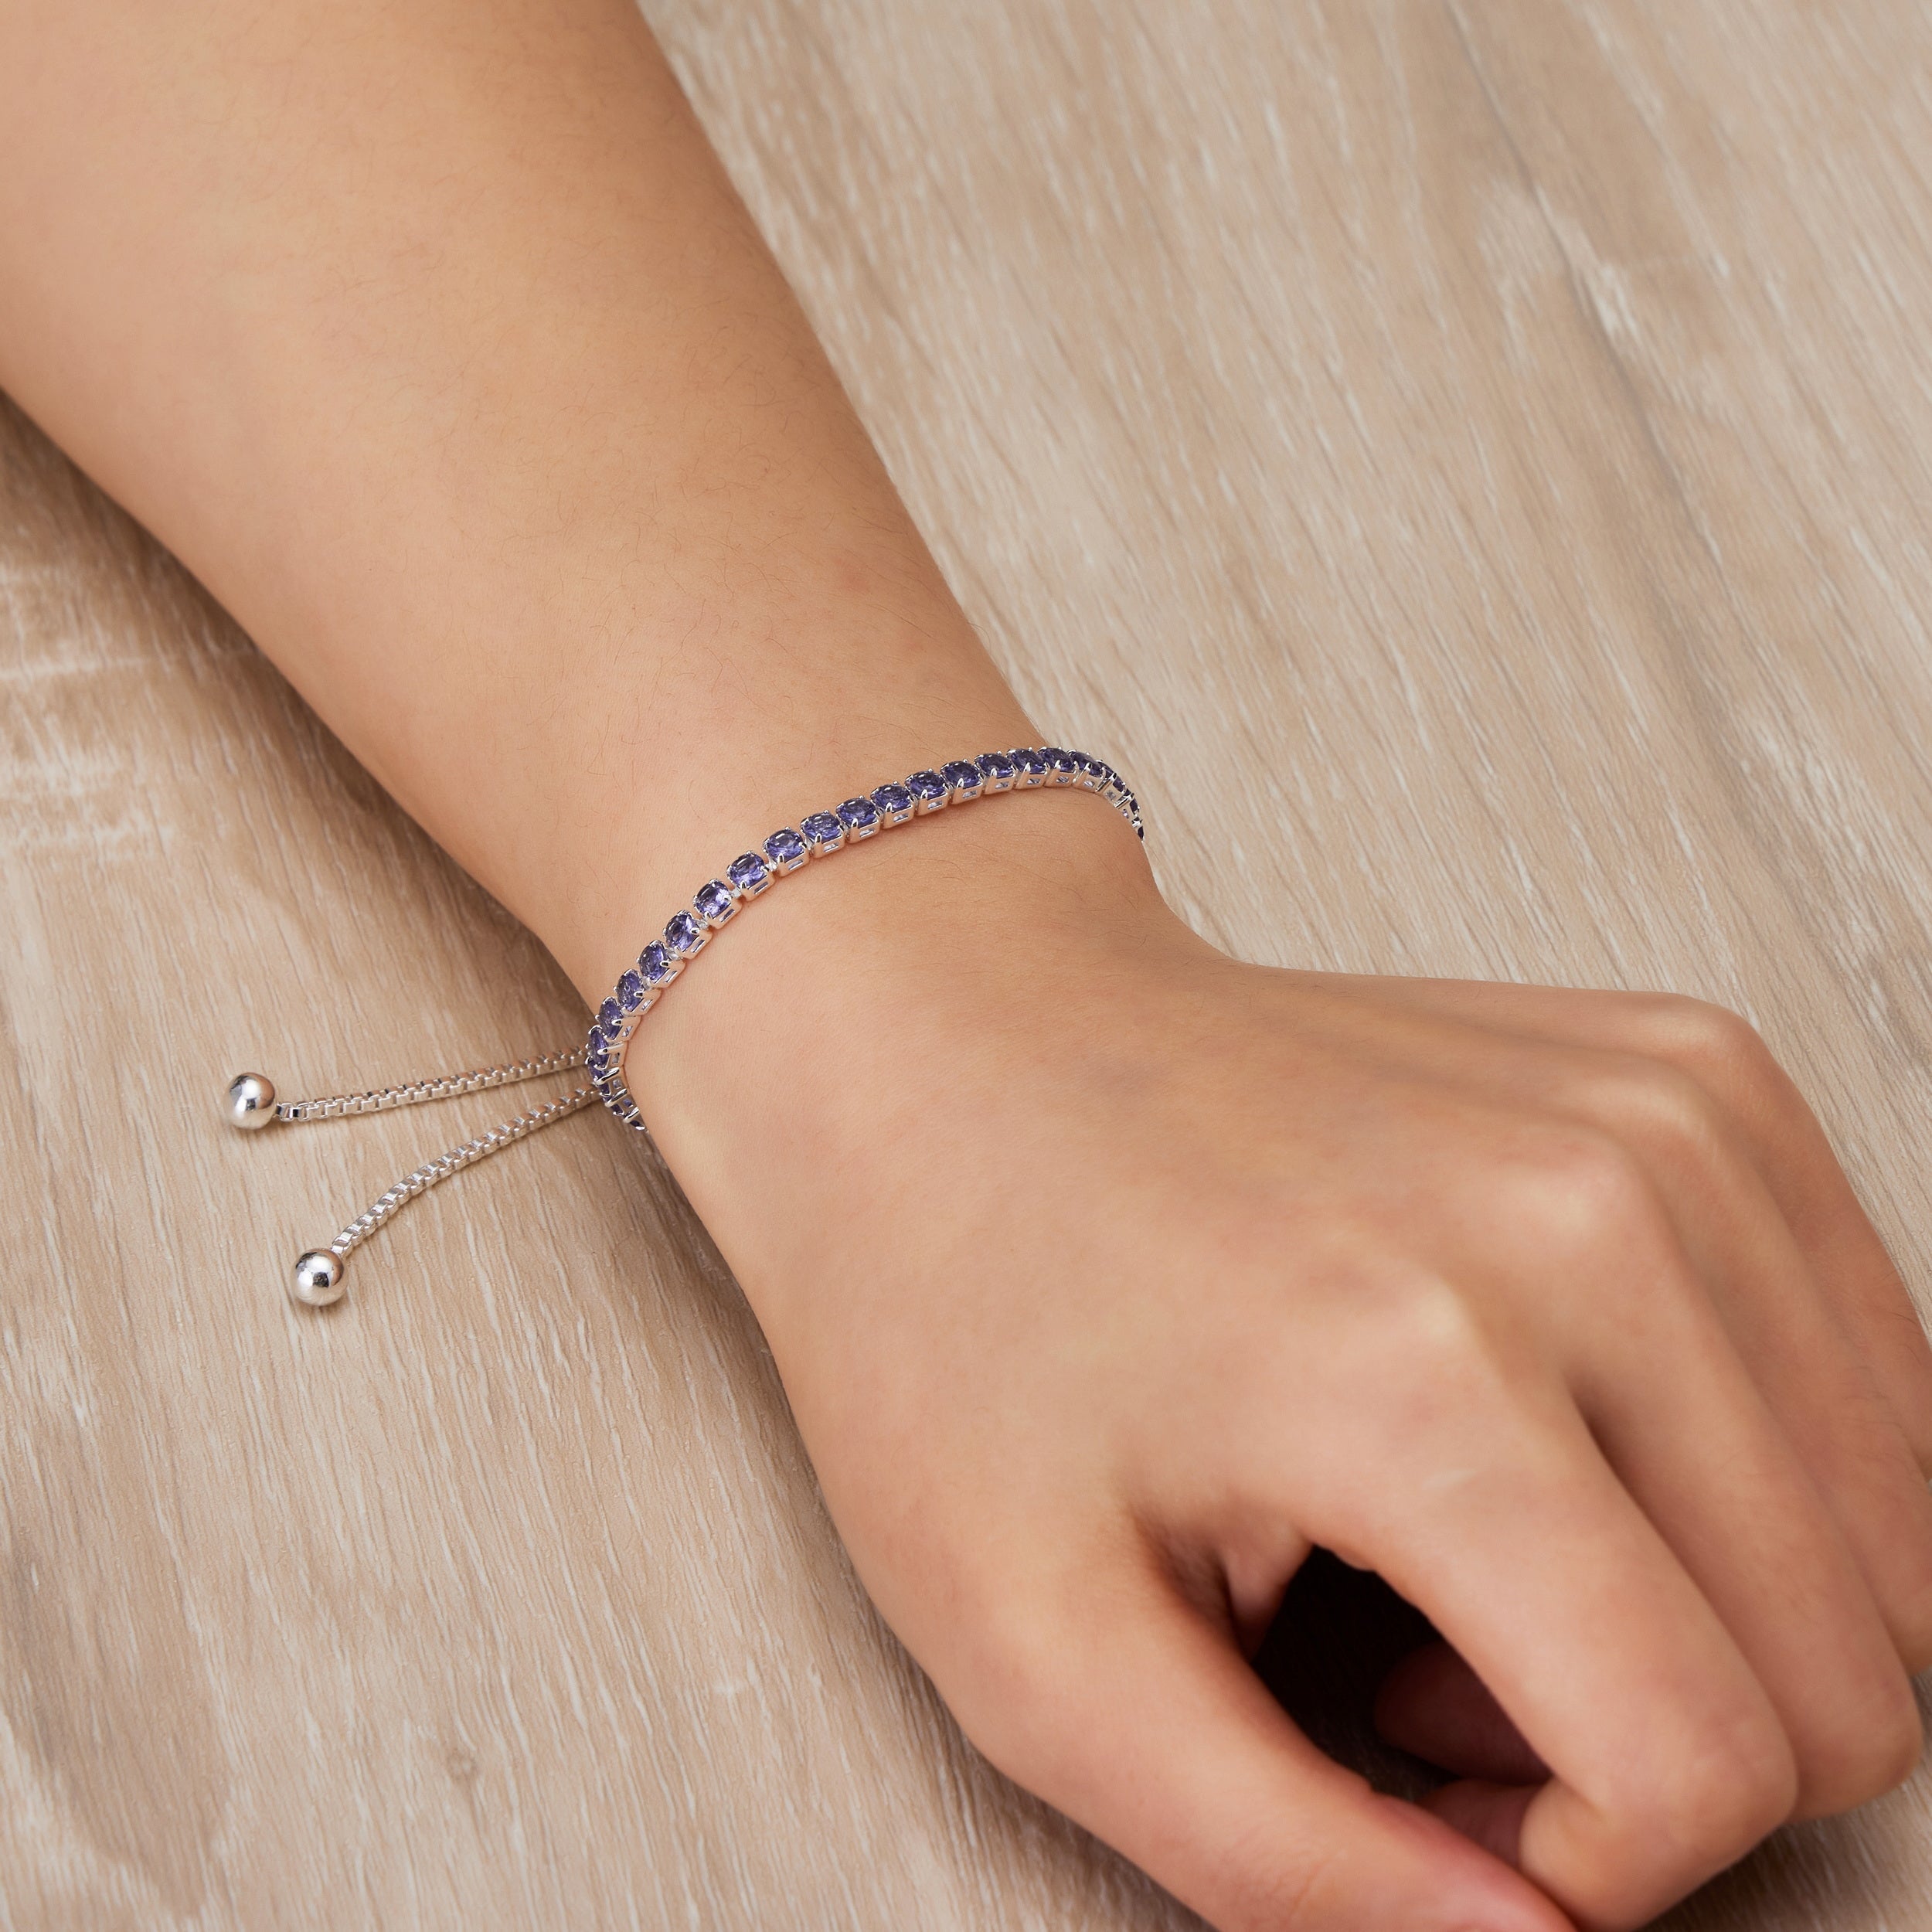 Light Purple Tennis Friendship Bracelet Created with Zircondia® Crystals